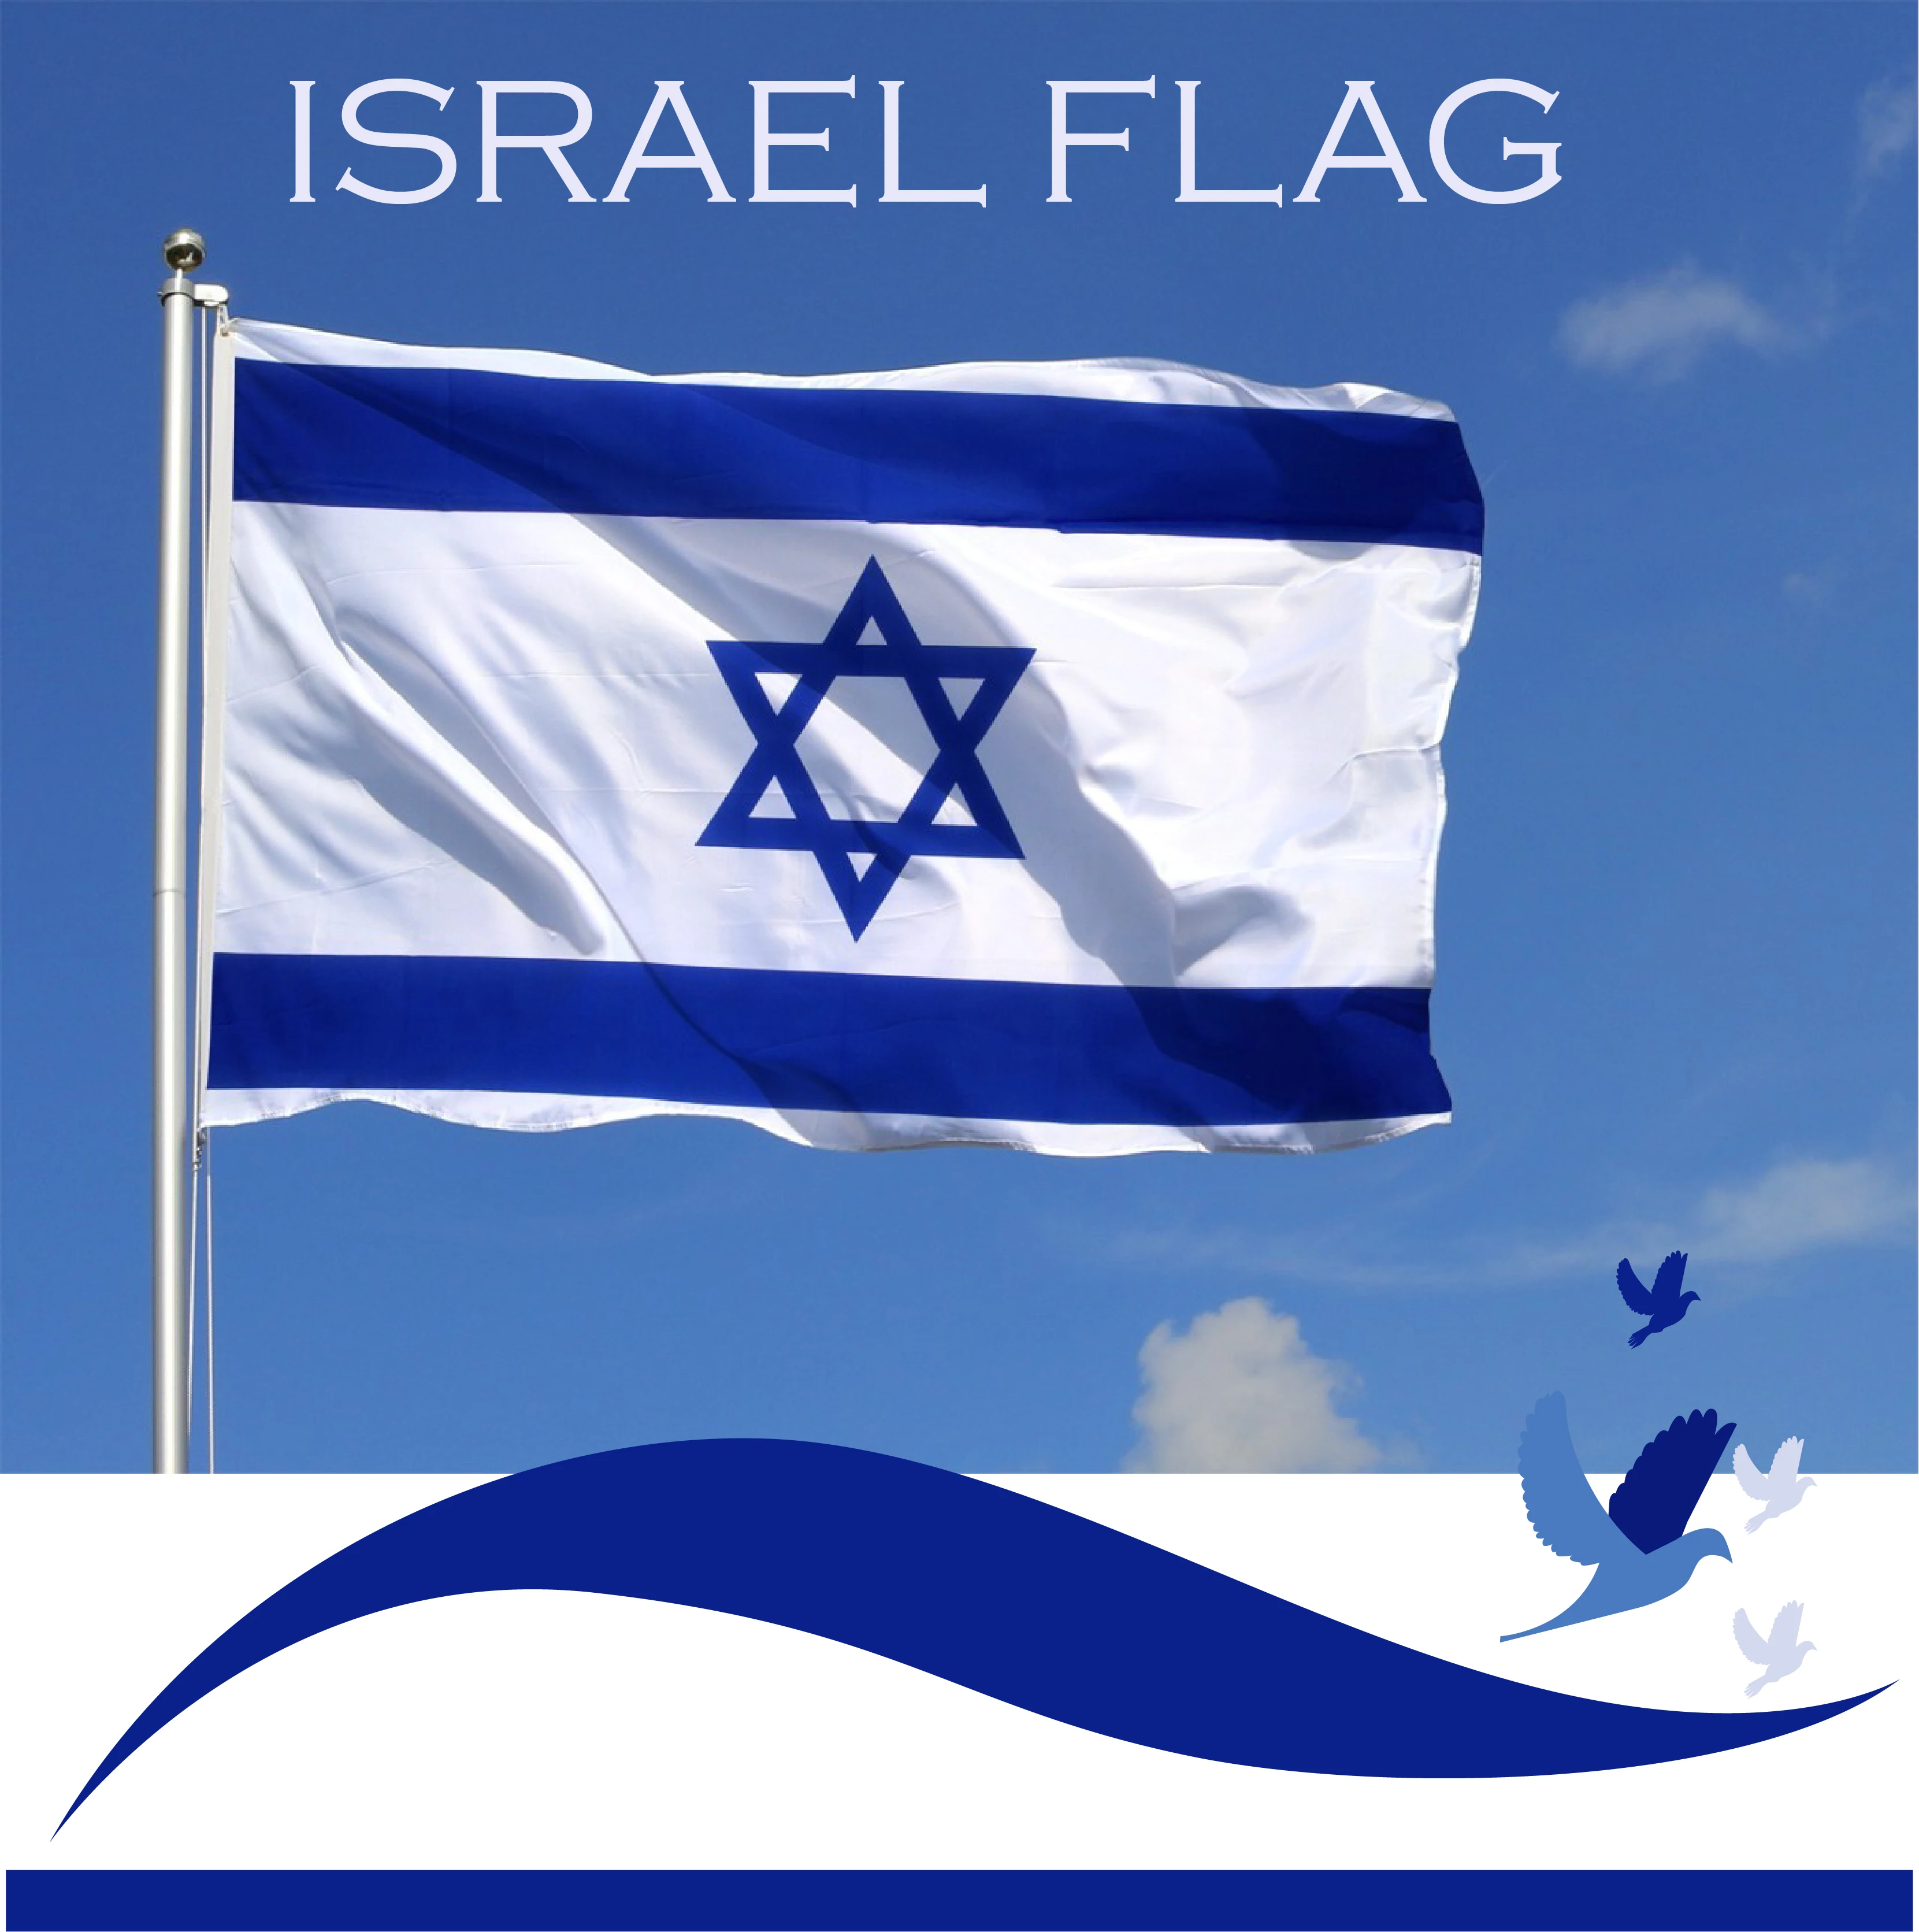 Исраэль хай. Флаг Израиля.